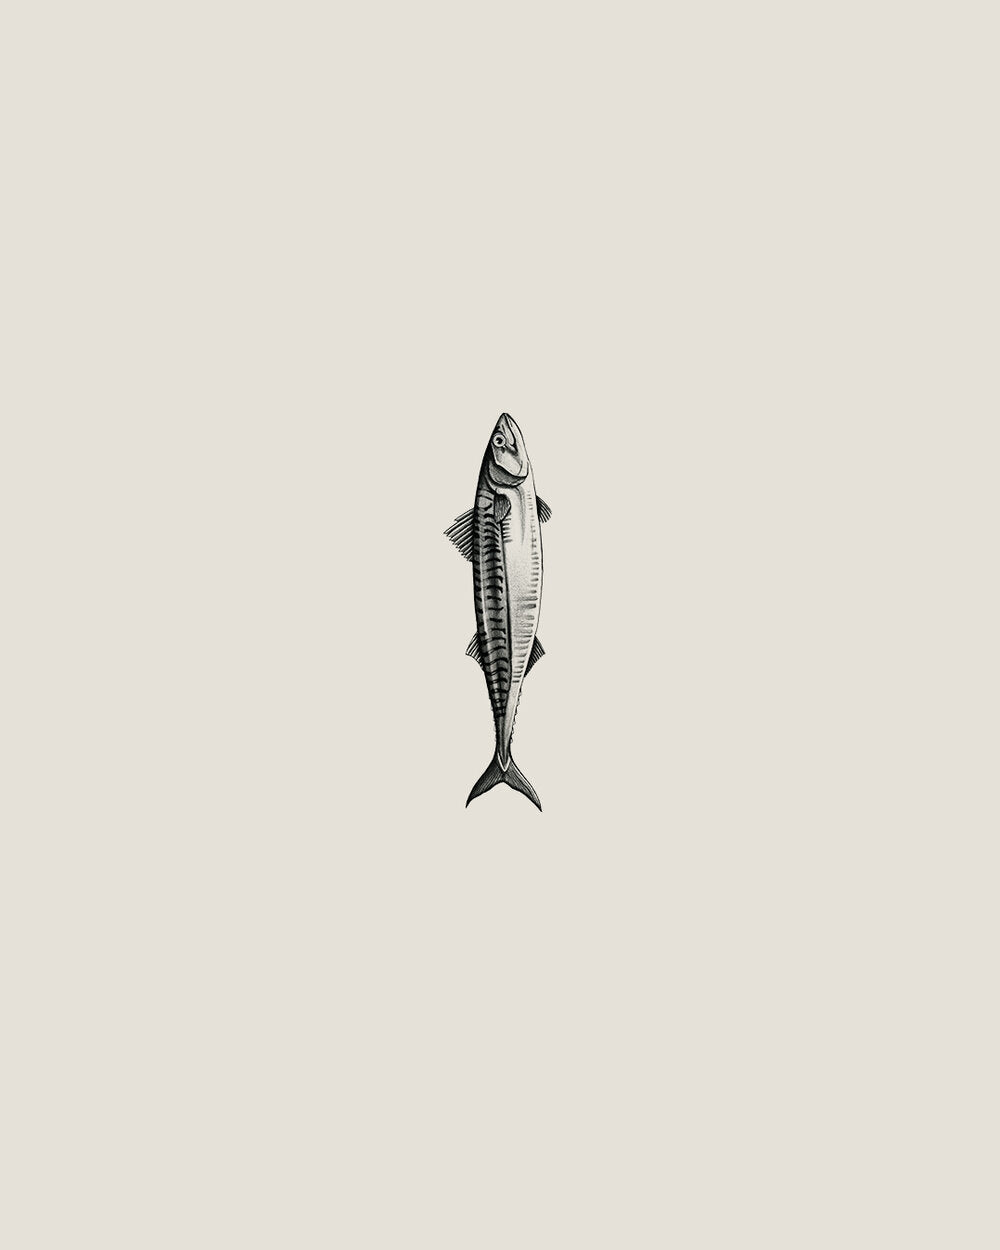 'Mackerel' by Sam Scales